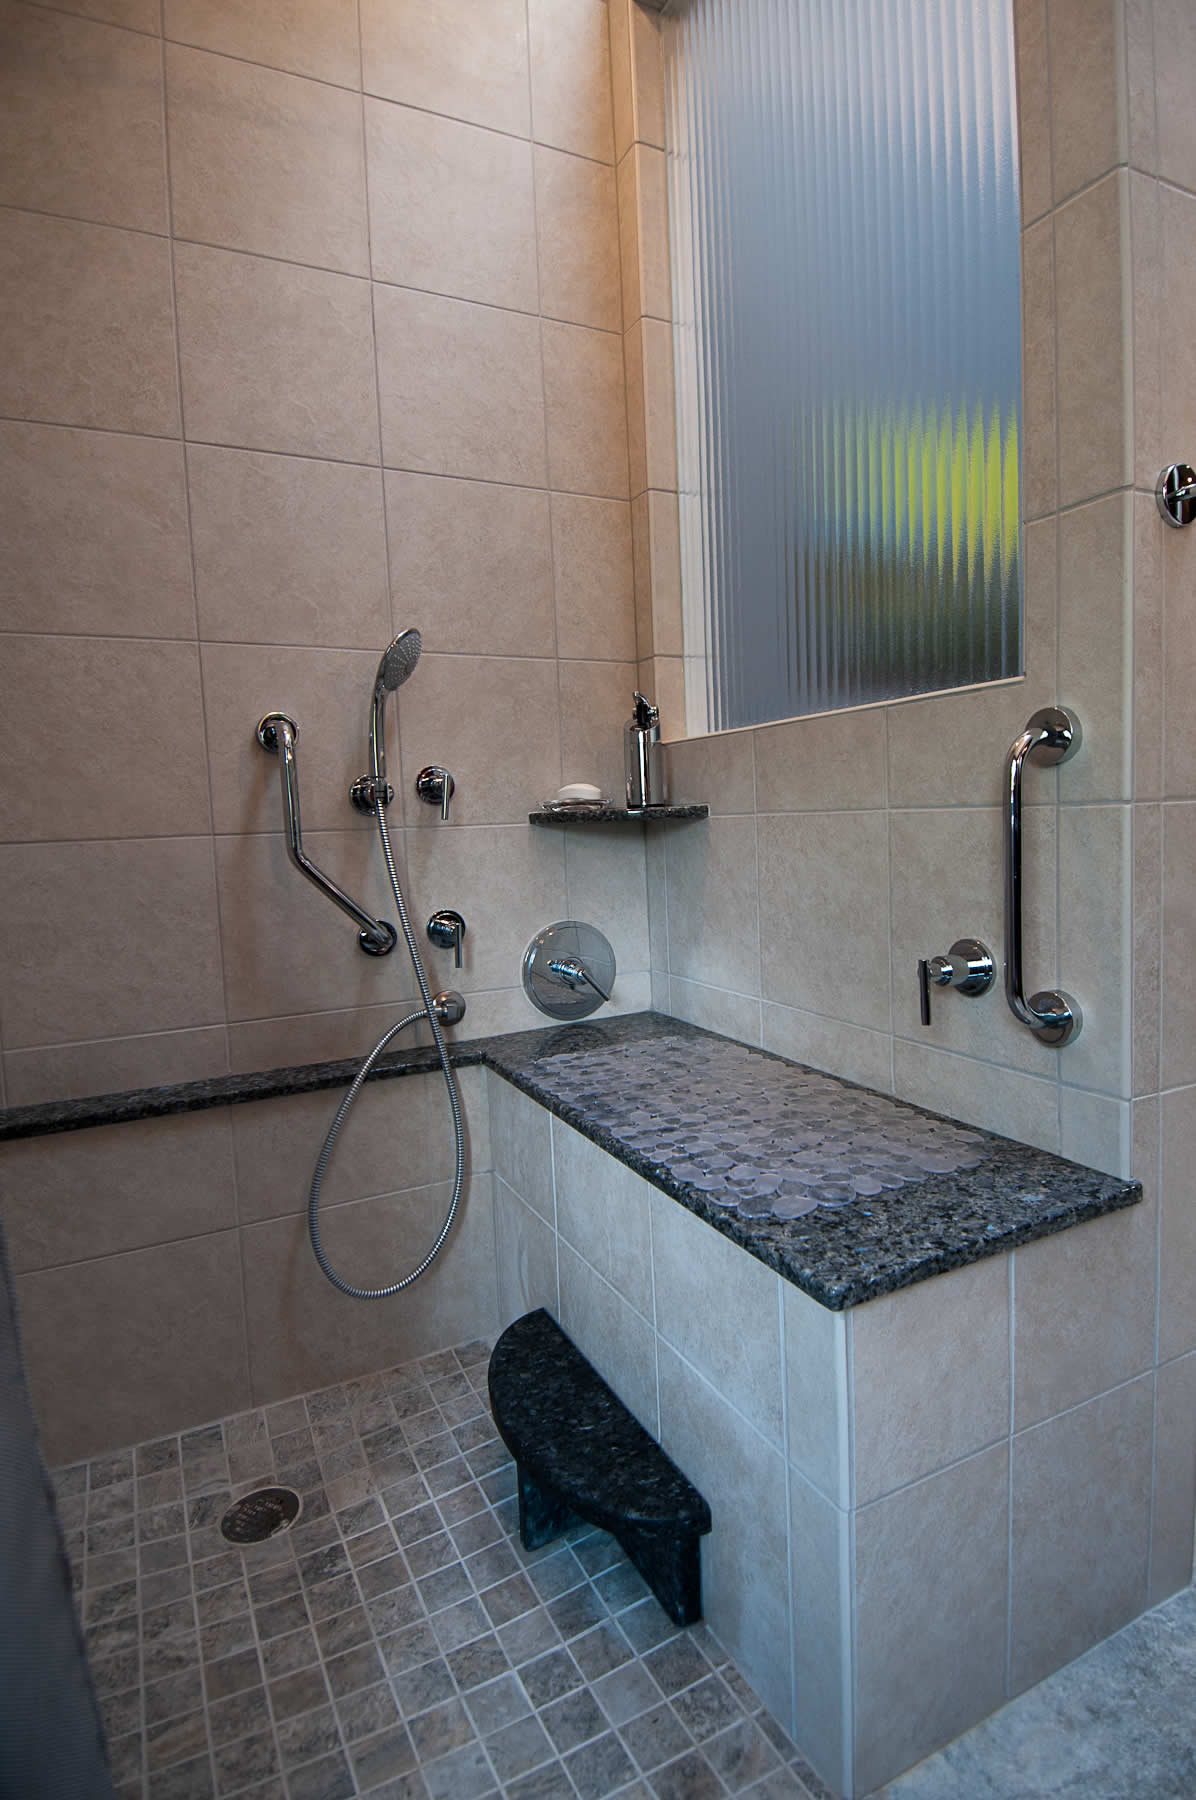 Shower after Homes for Life remodel